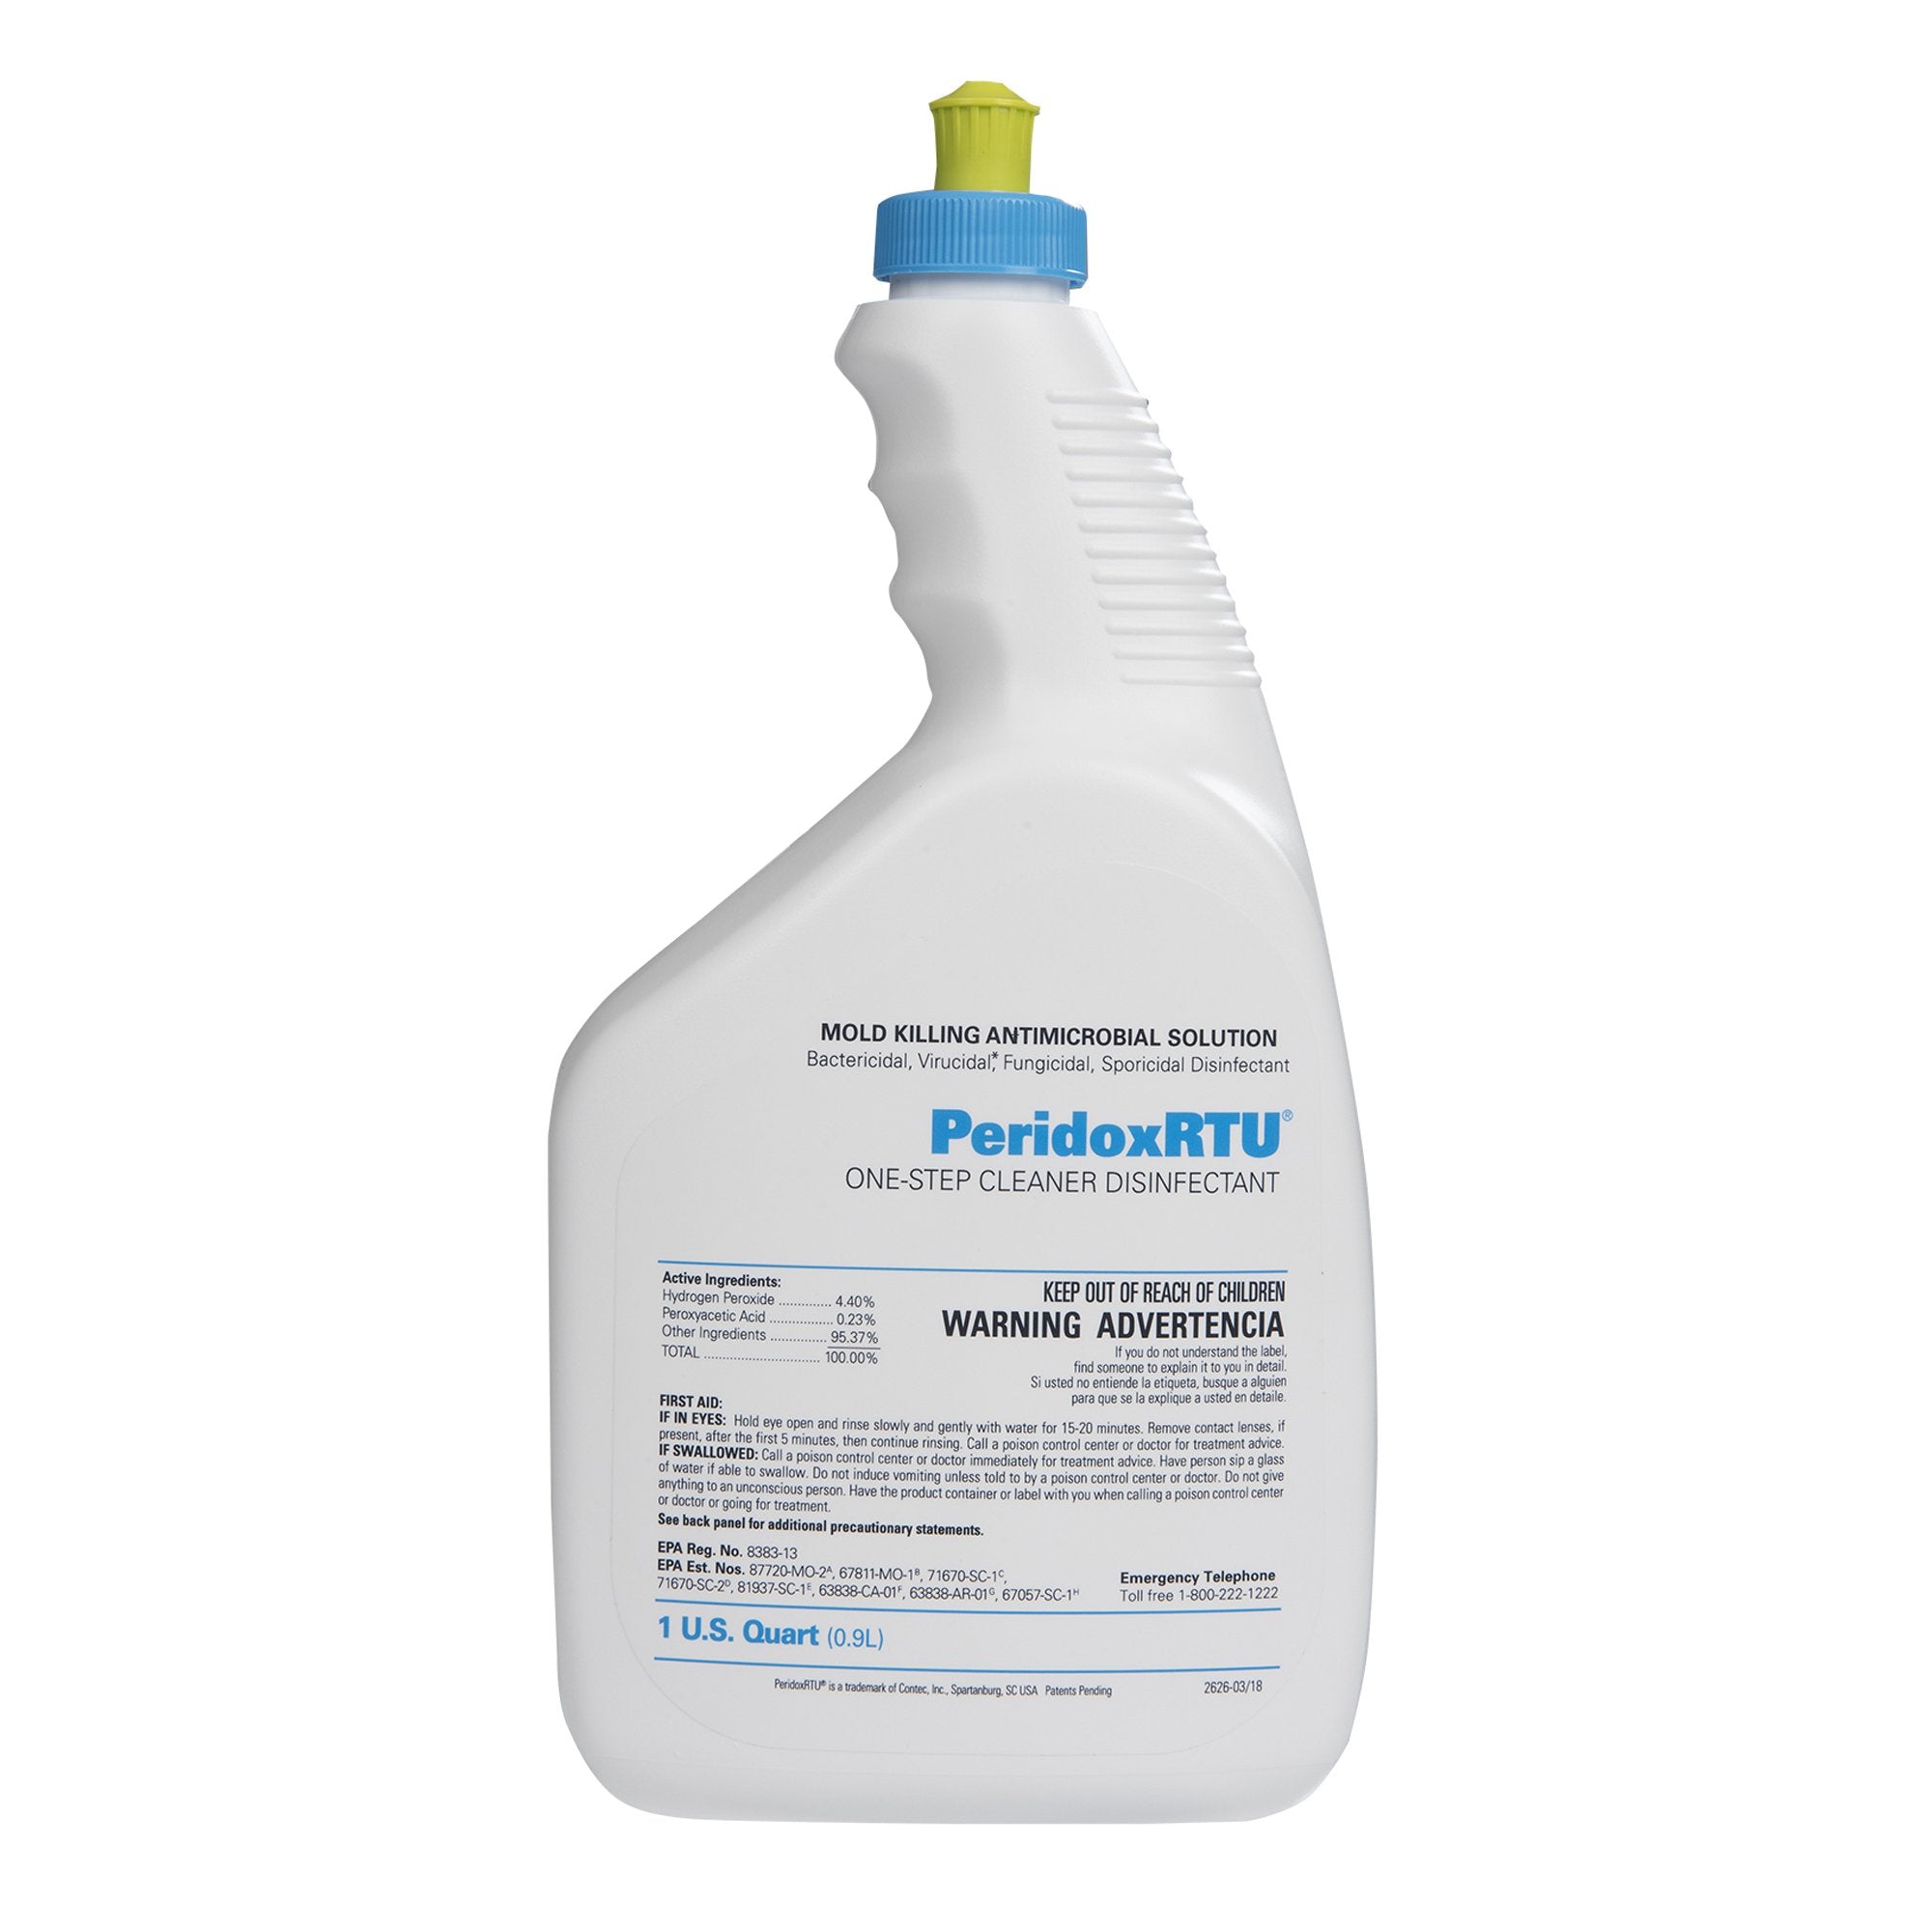 PeridoxRTU® Sporicidal Surface Disinfectant Cleaner Peroxide Based Manual Pour Liquid 32 oz. Bottle Vinegar Scent Sterile